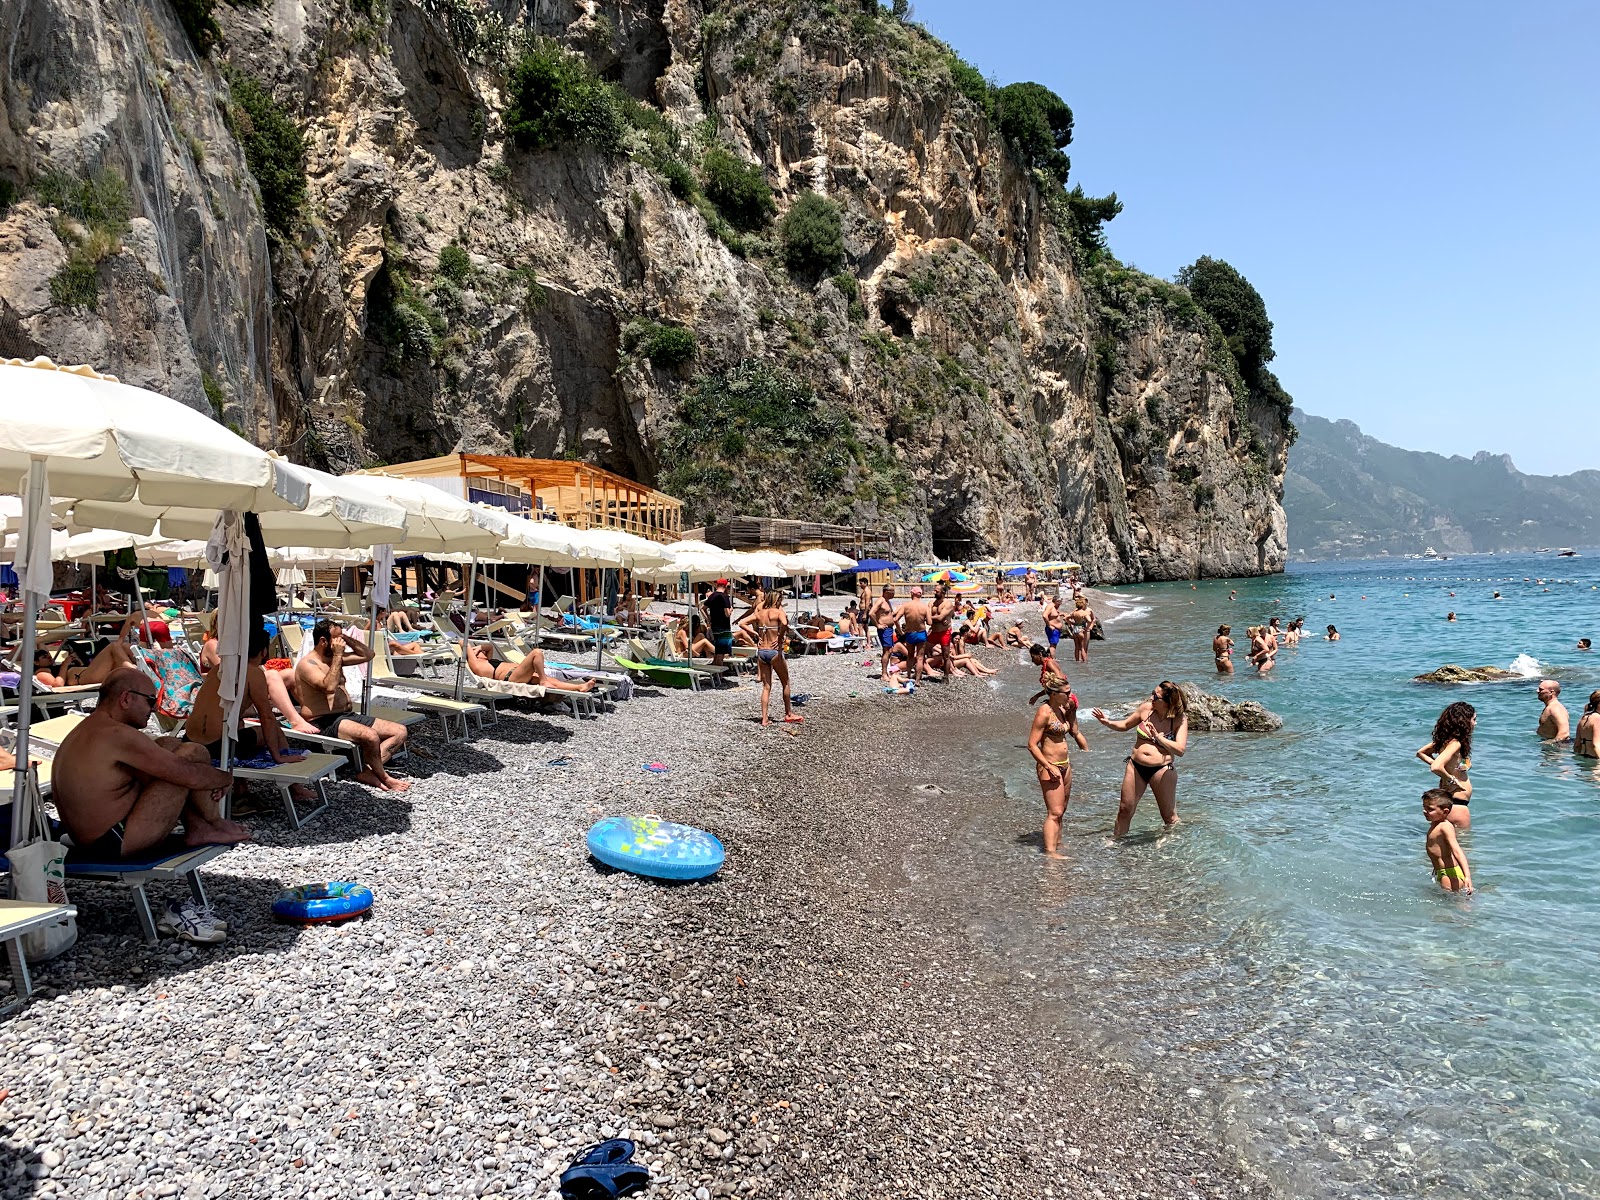 Foto de Il Duoglio Spiaggia con muy limpio nivel de limpieza